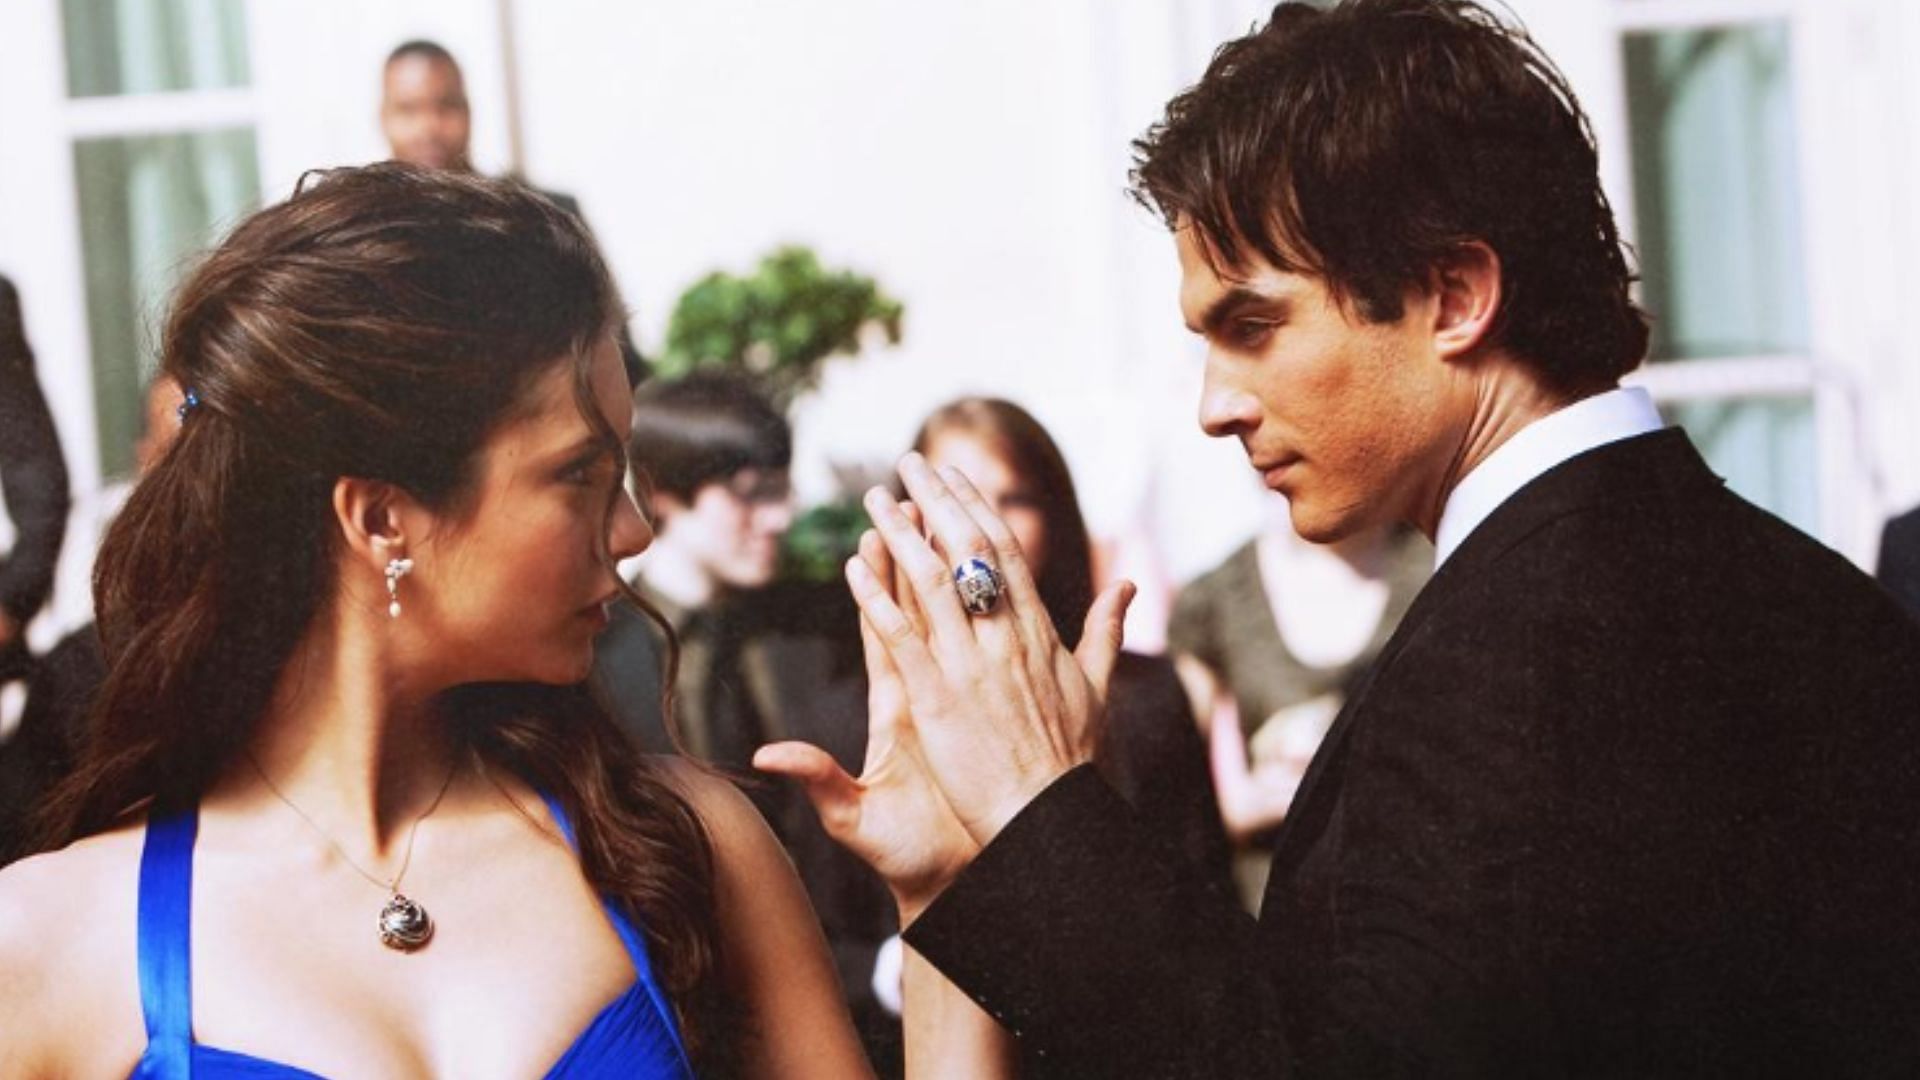 Elena and Damon in The Vampire Diaries (Image via Instagram @thecwtvd)